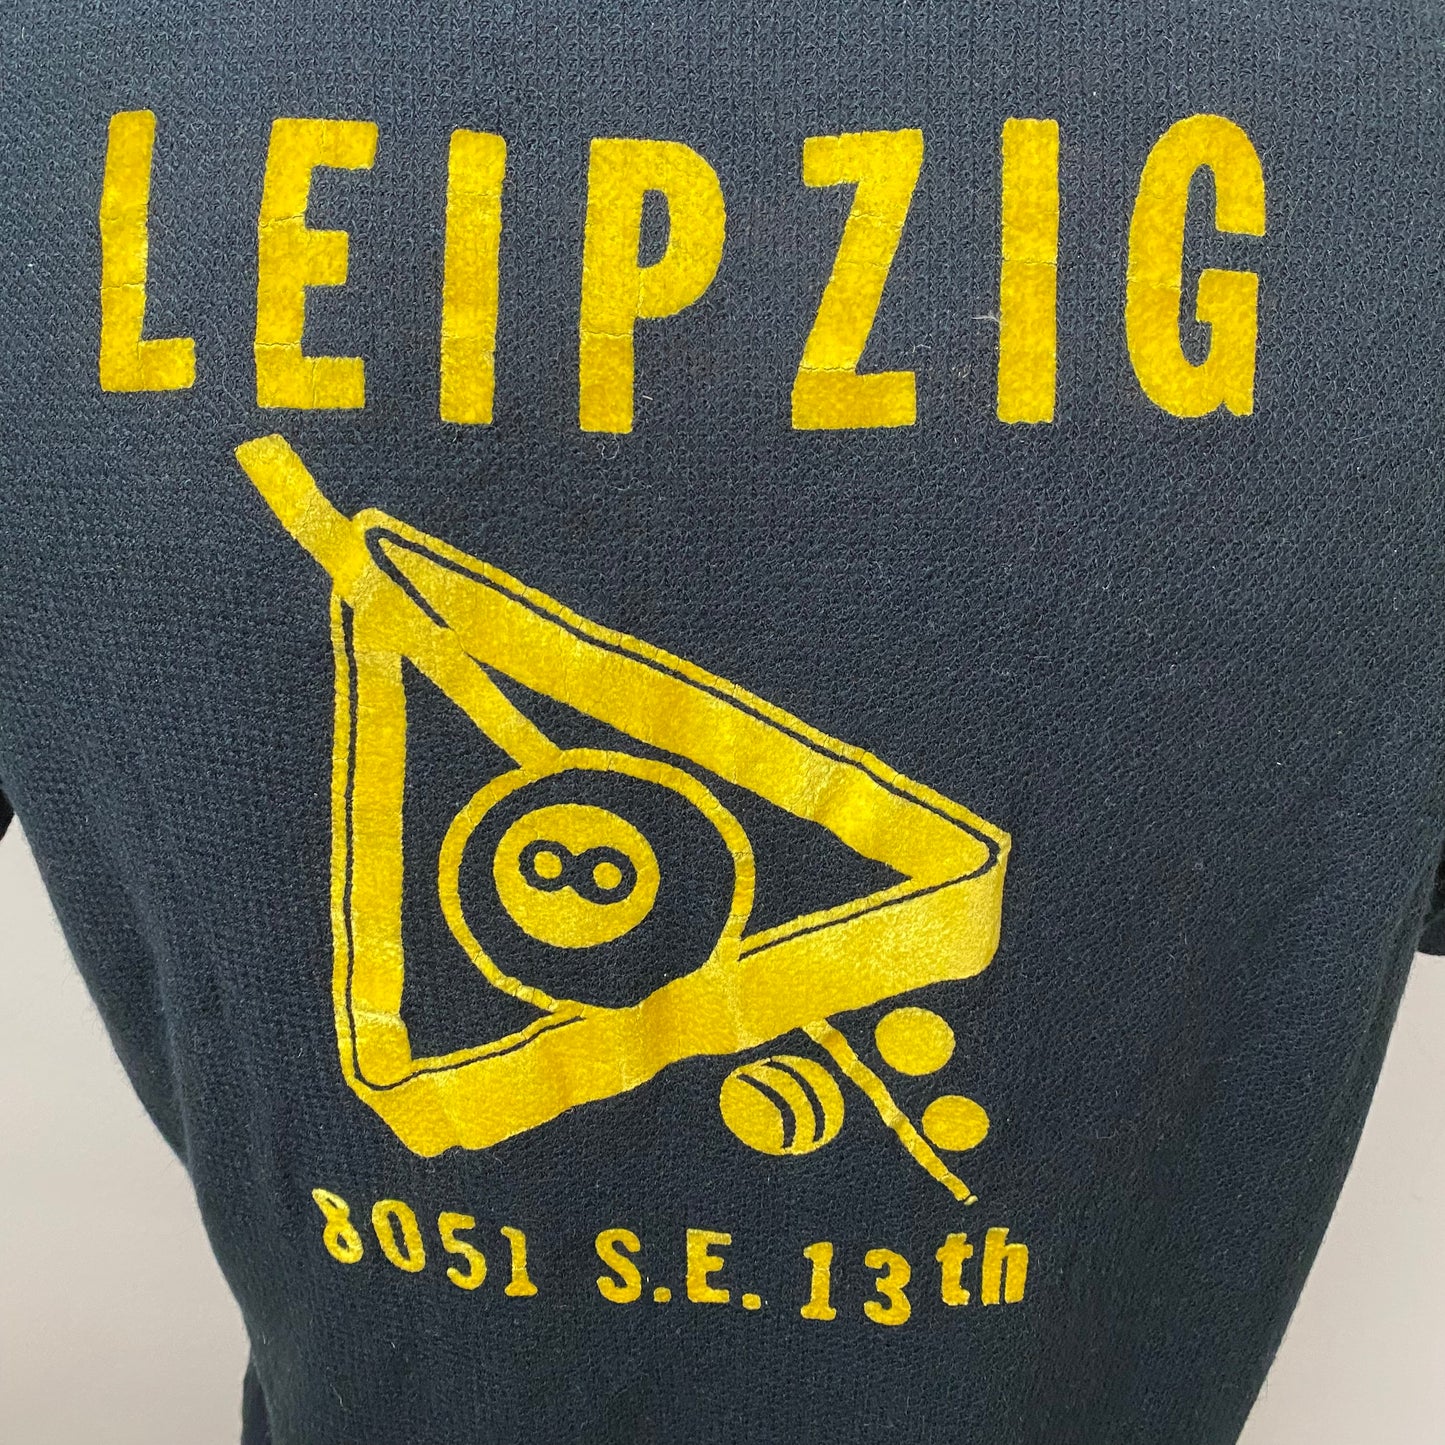 1970s Leipzig Tavern Portland Bowling Shirt, Hilton Polo Size Large, Flocked, Chain Stitch